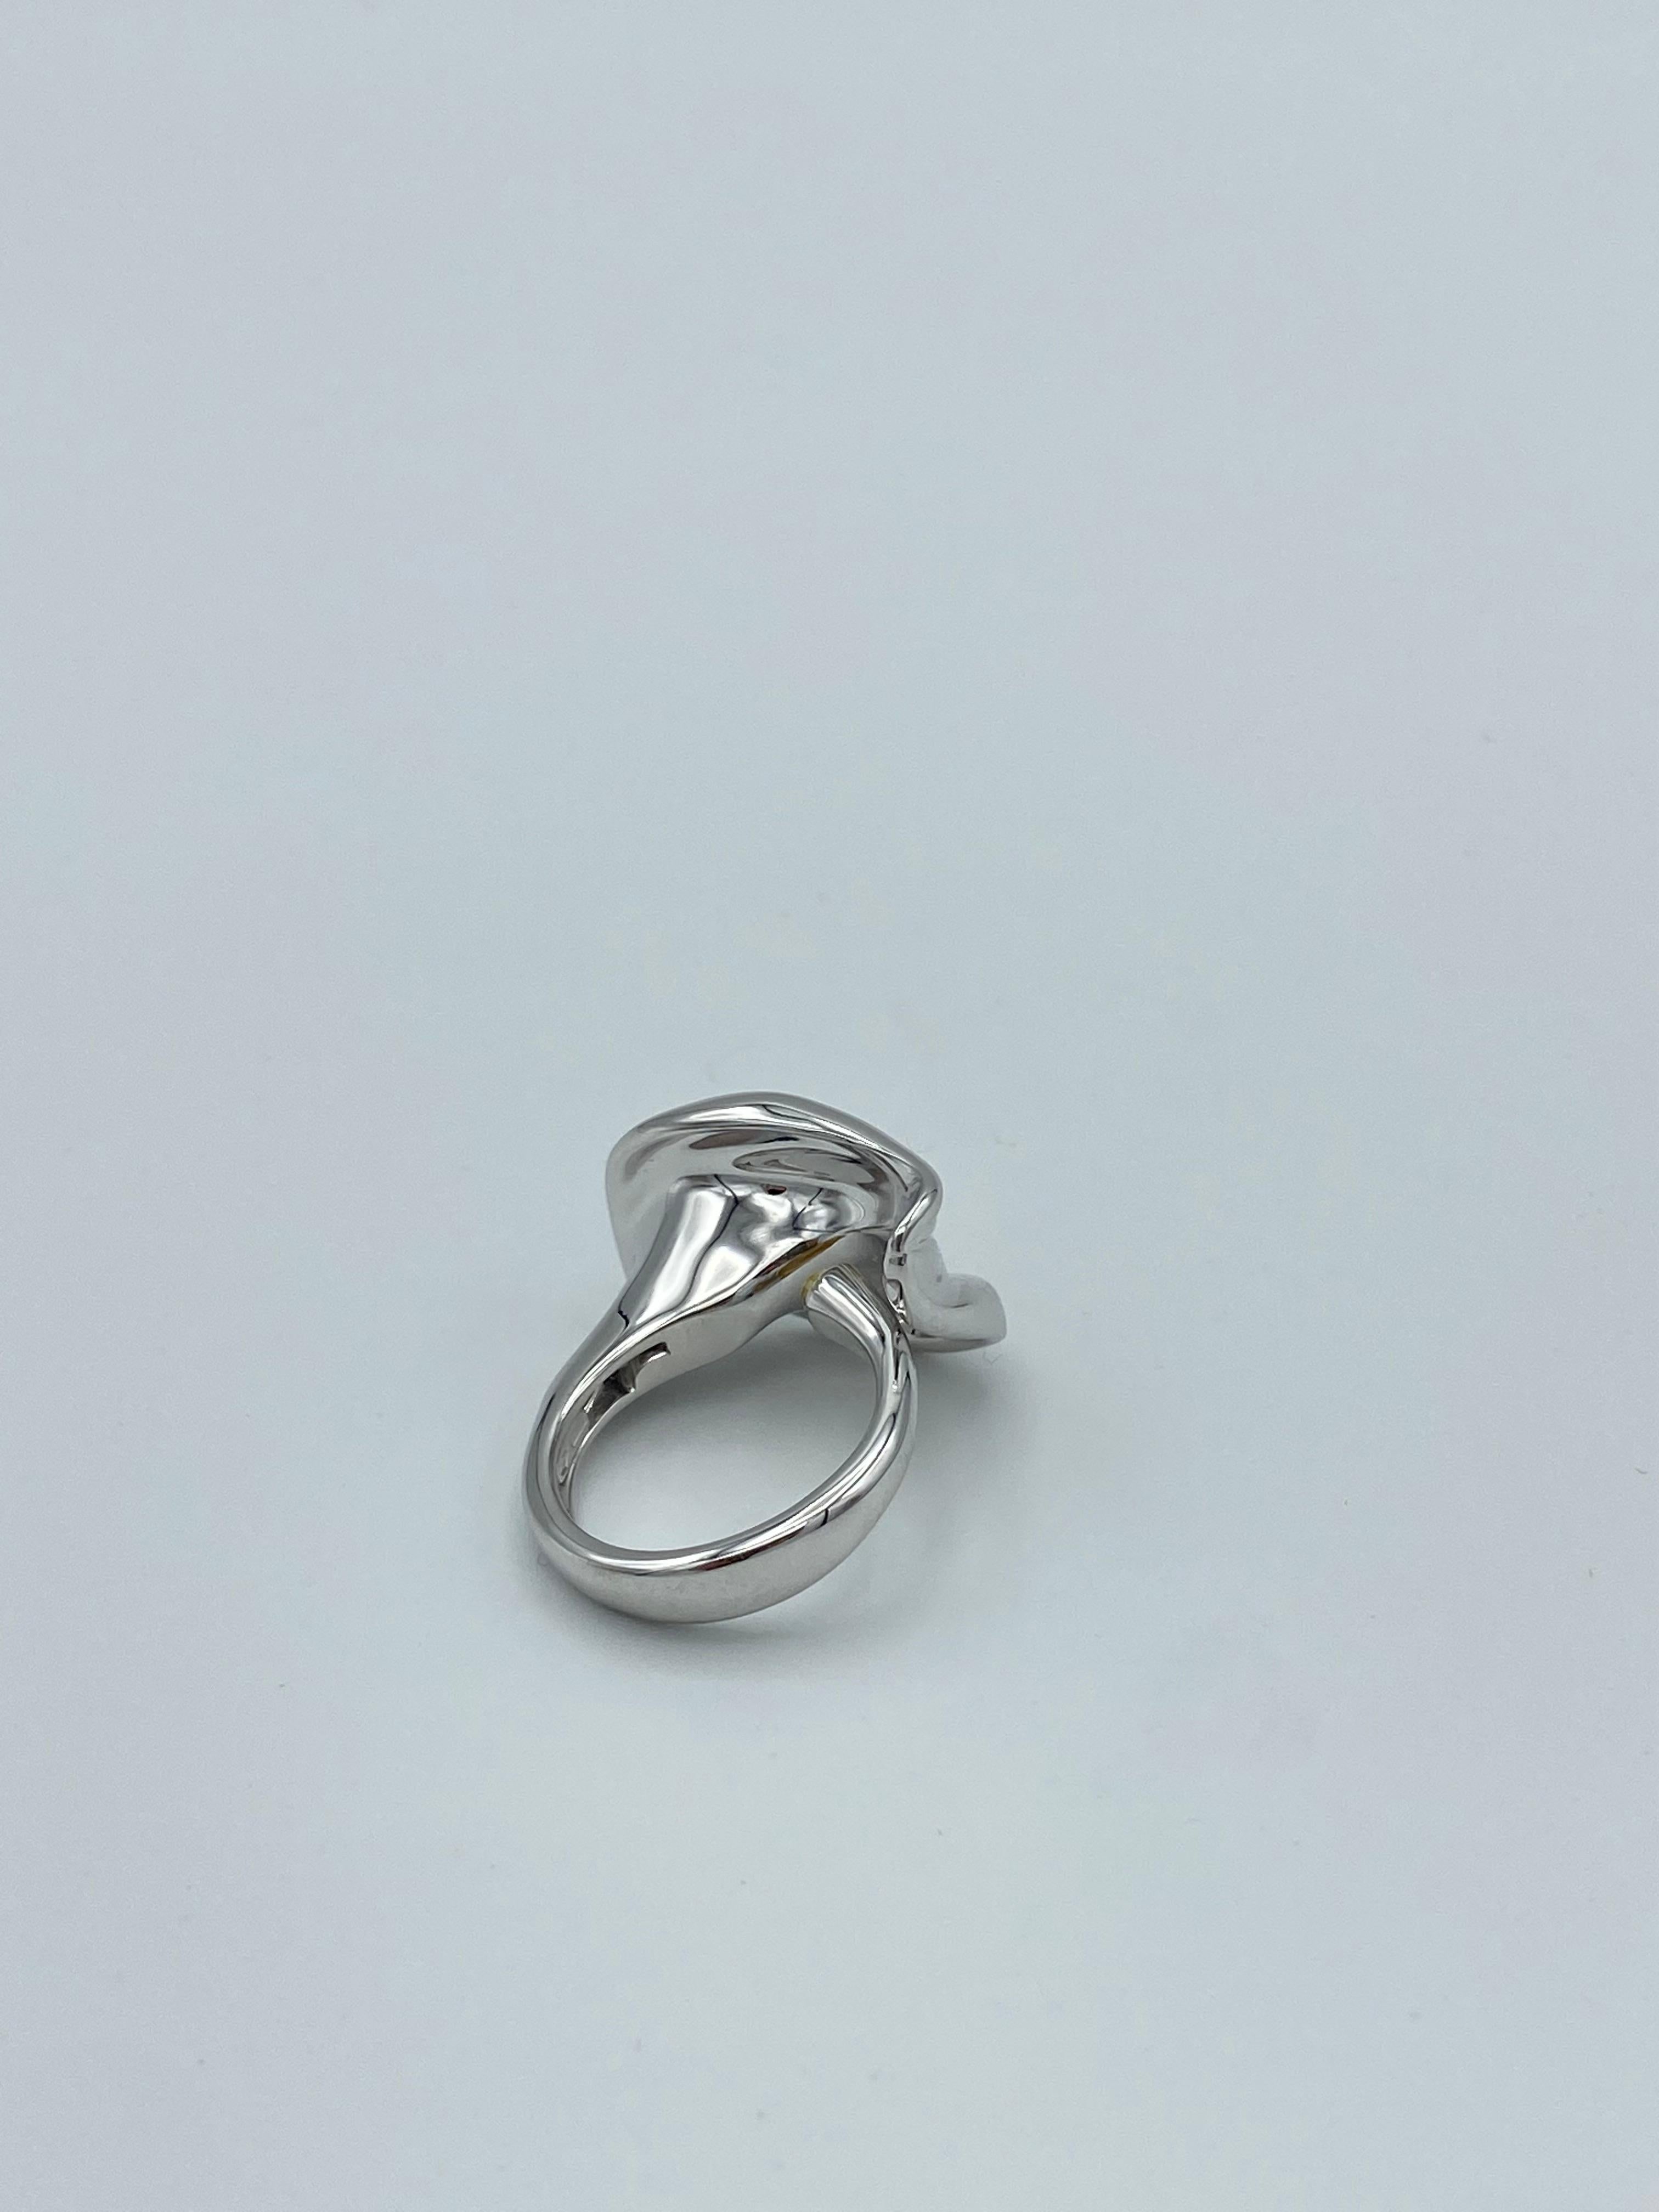 Round Cut Petronilla Calla White Diamond Yellow Sapphire 18Kt Gold Ring Italian Style For Sale